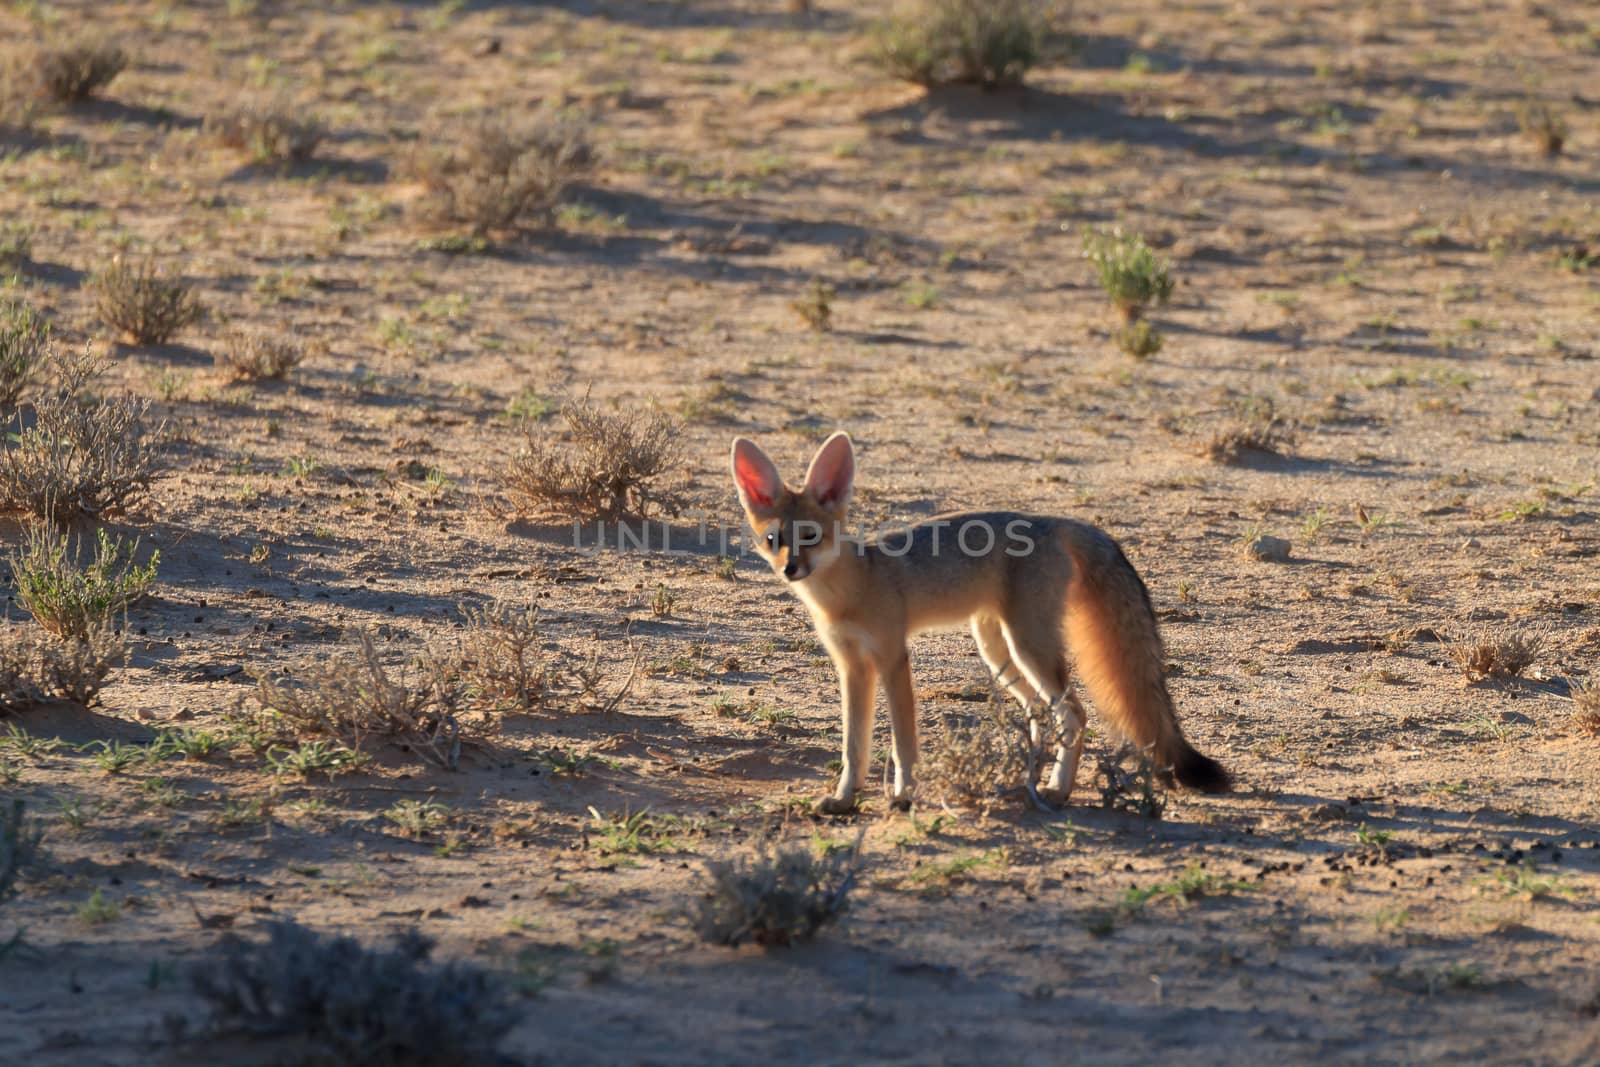 A Bat eared fox from Kgalagadi Transfontier park, South Africa